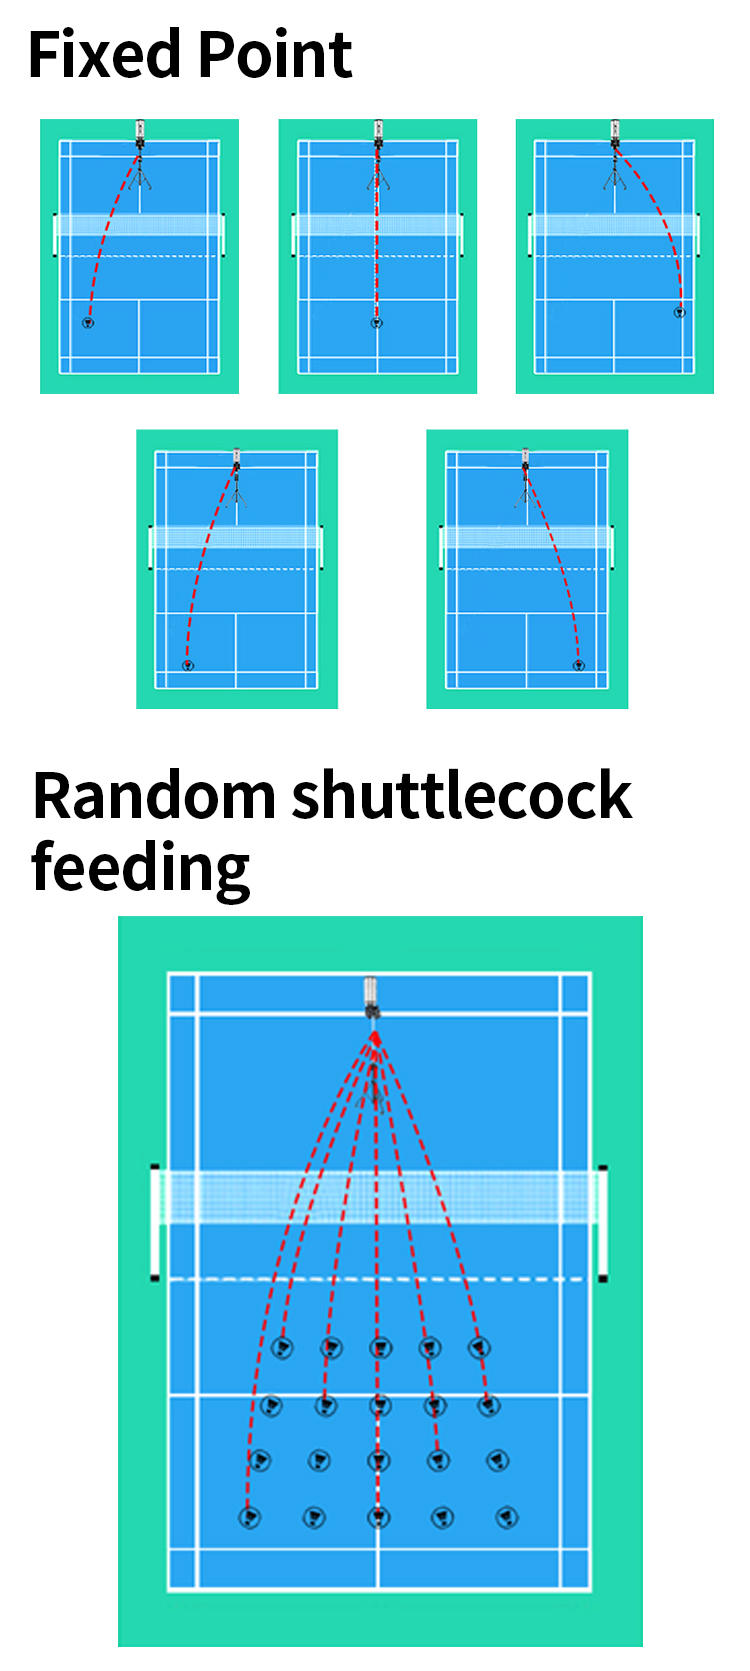 Siboasi badminton ball serving machine